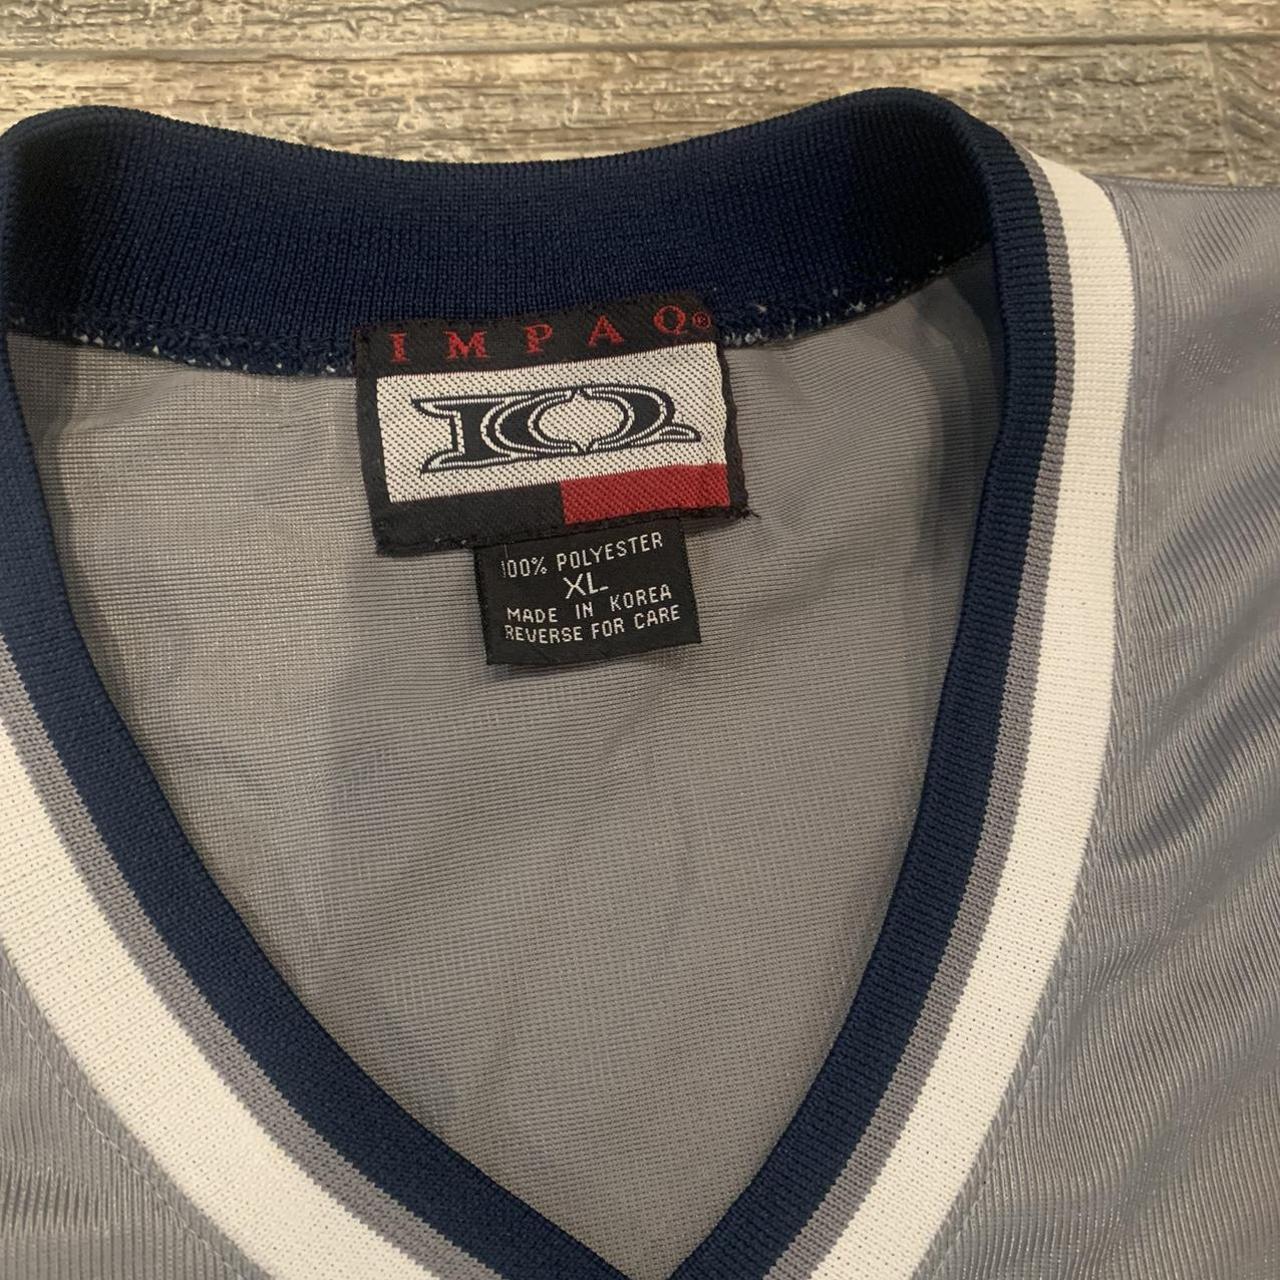 Georgetown Hoyas Vintage Hockey Jersey Size XL